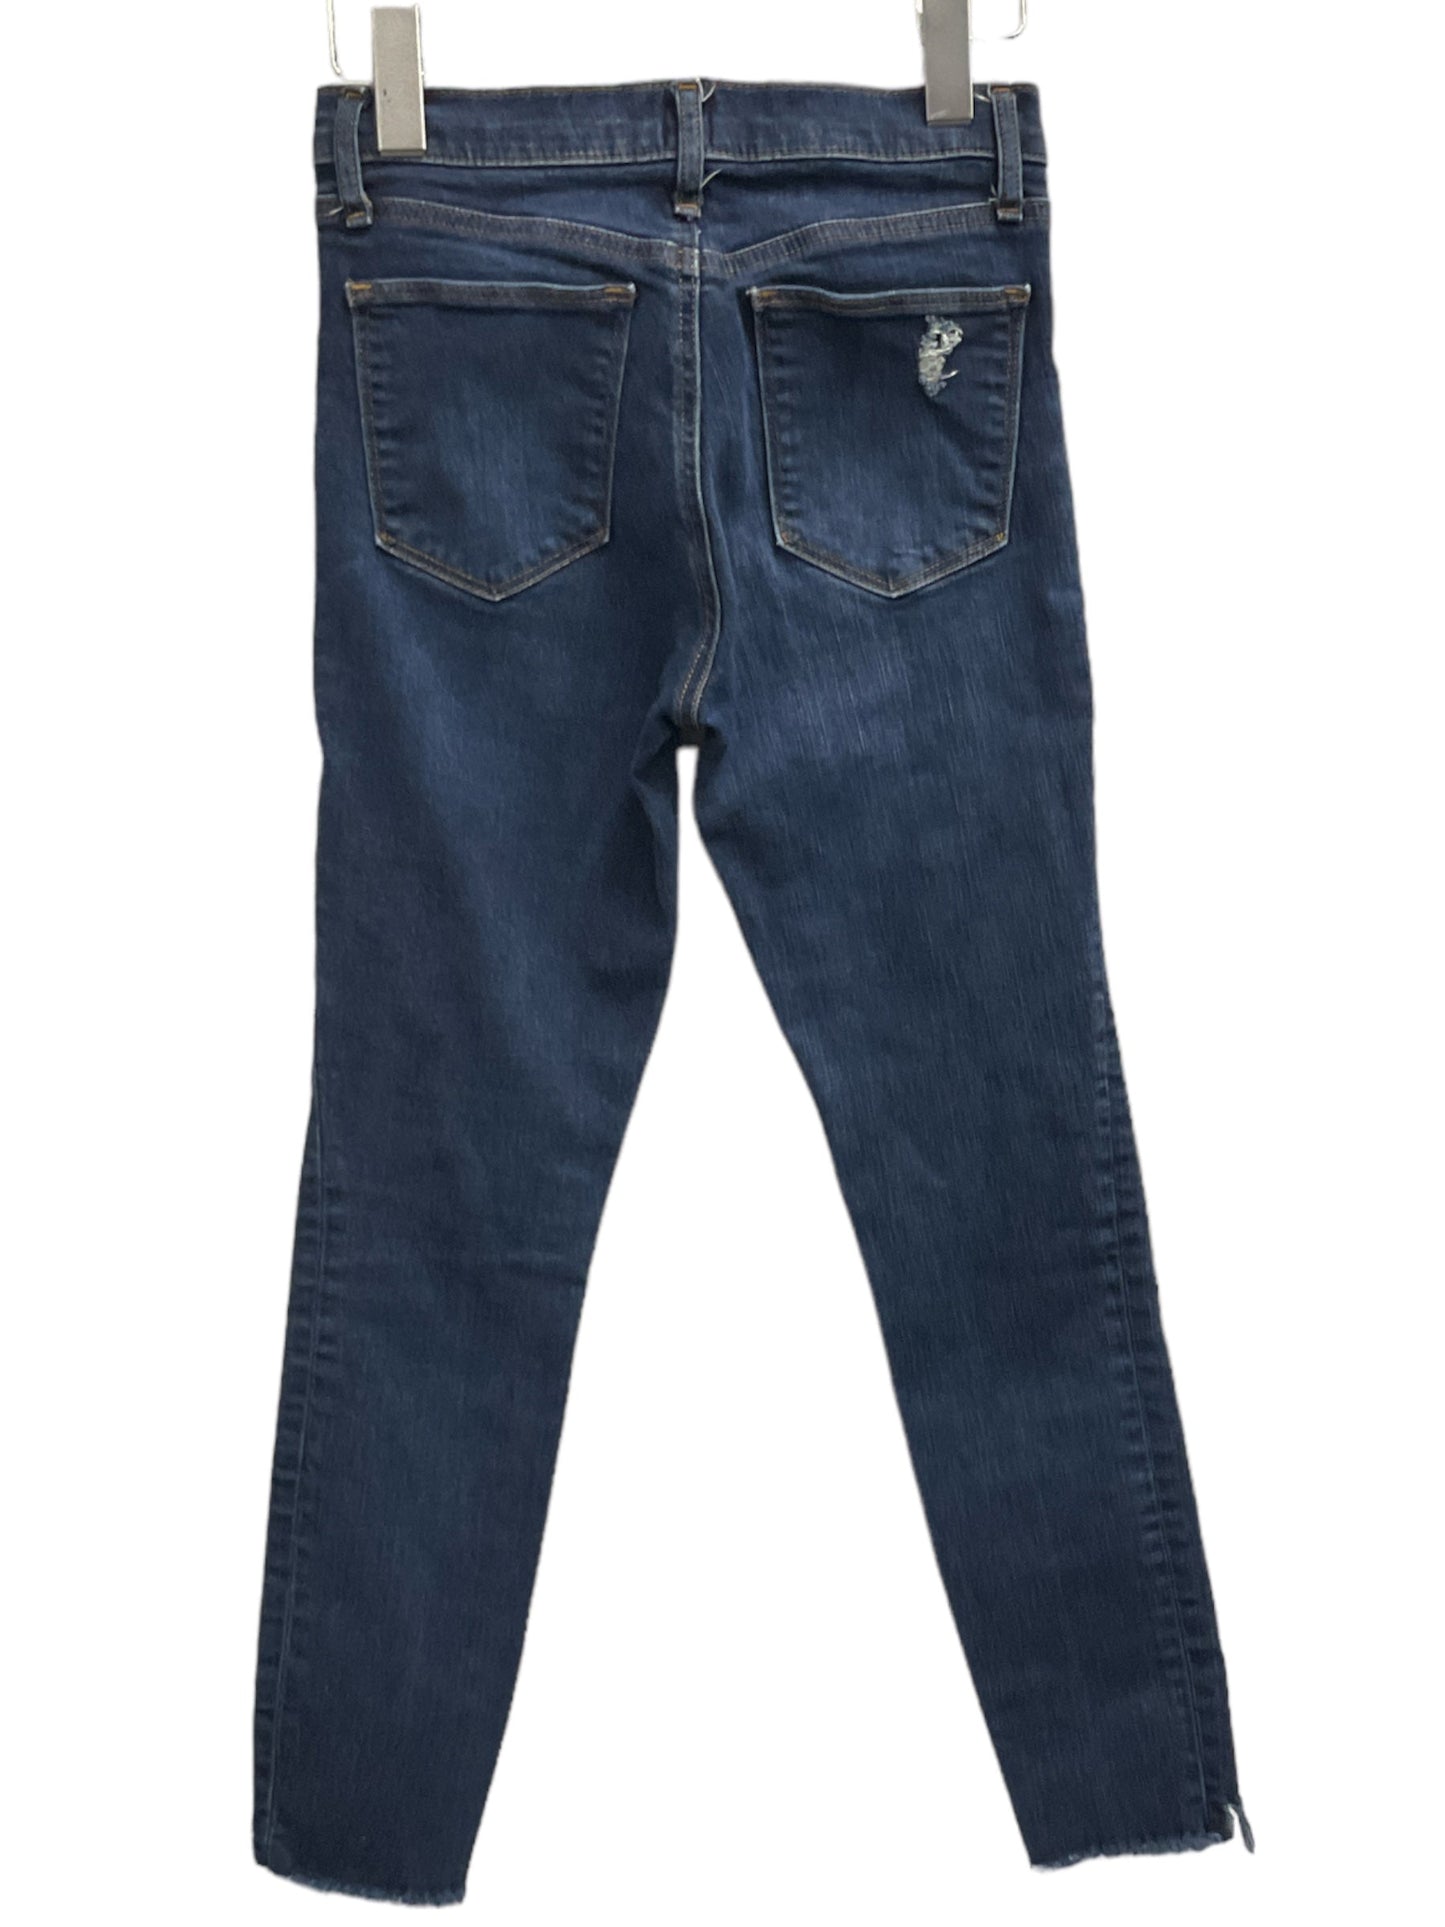 Jeans Skinny By Gap  Size: 2